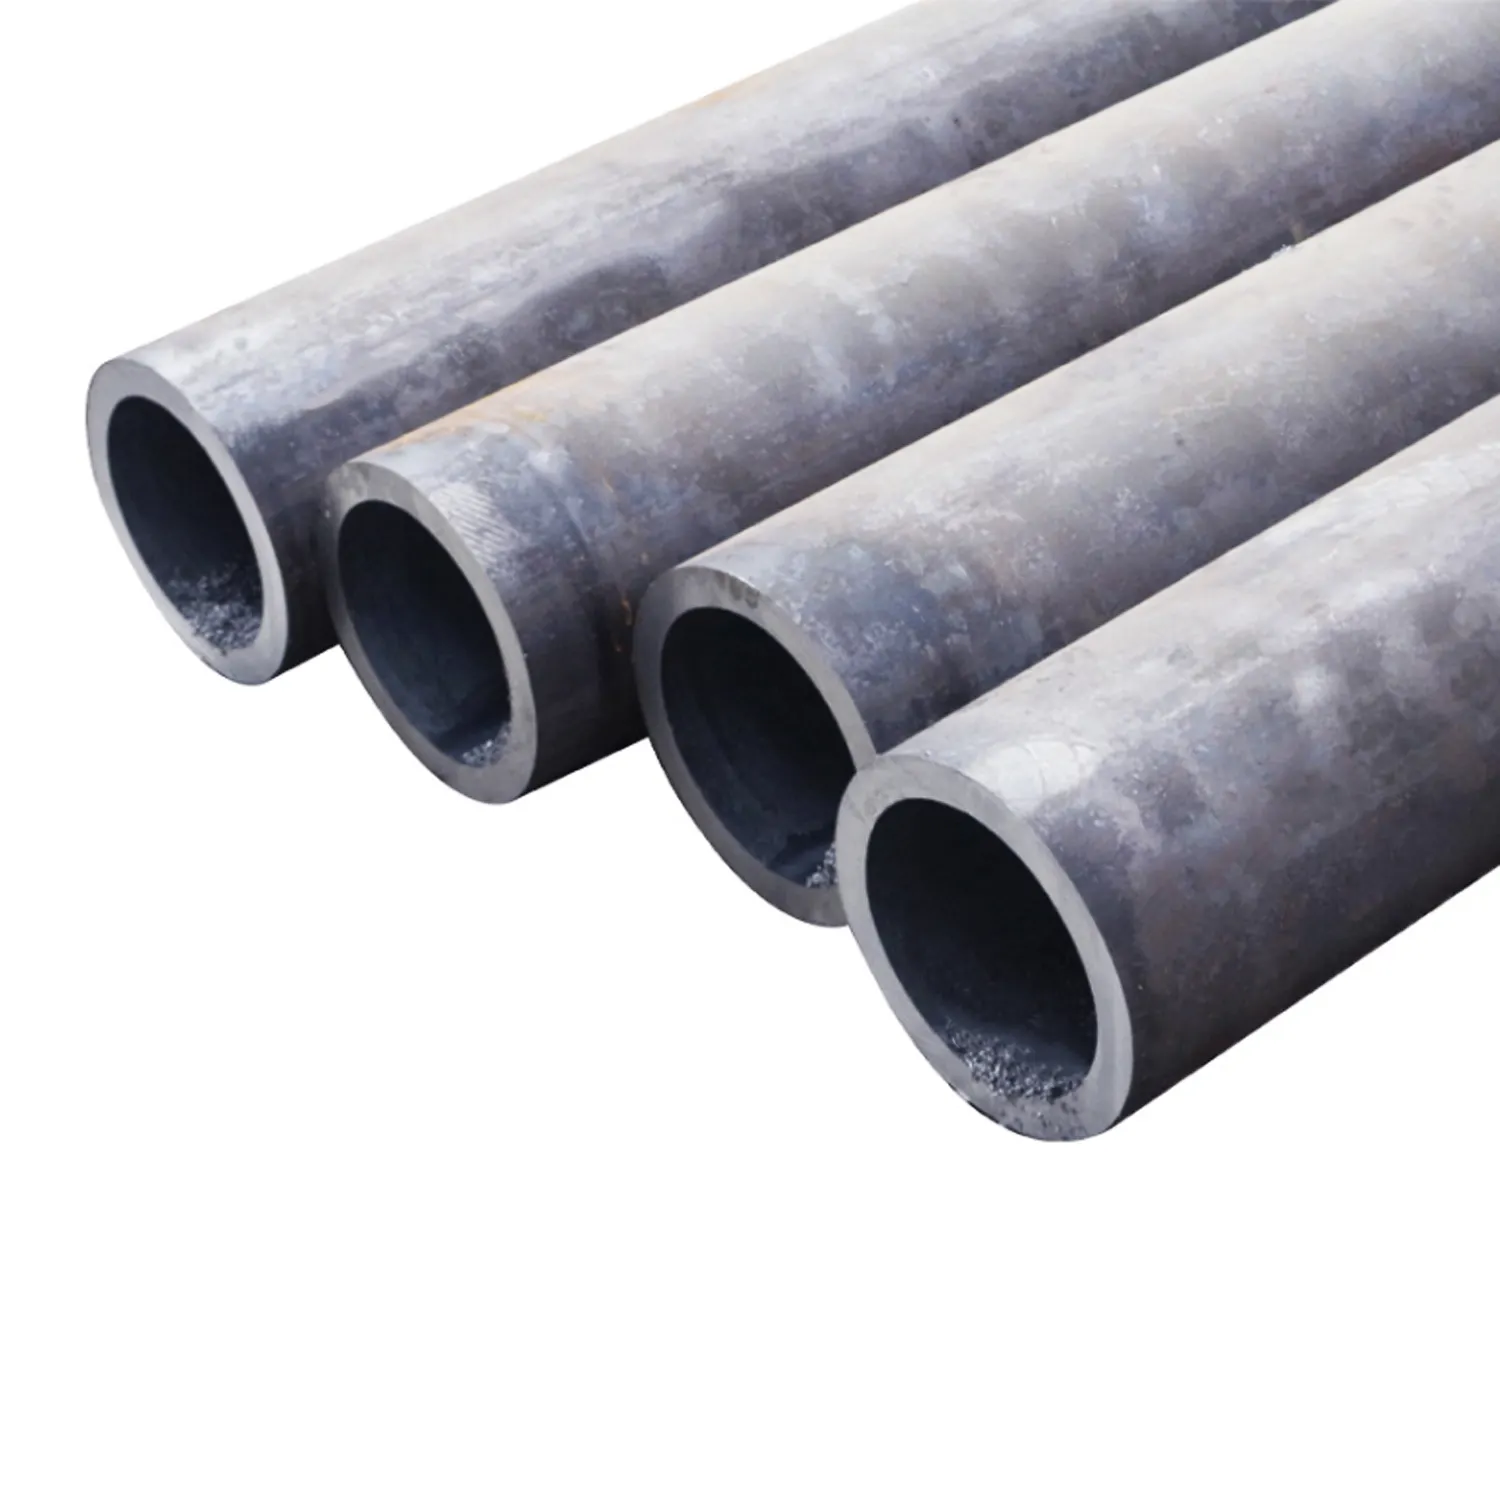 EN10025 S235JR Q345B tubi in acciaio al carbonio tubo tondo saldato di grande diametro tubo quadrato in acciaio senza saldatura